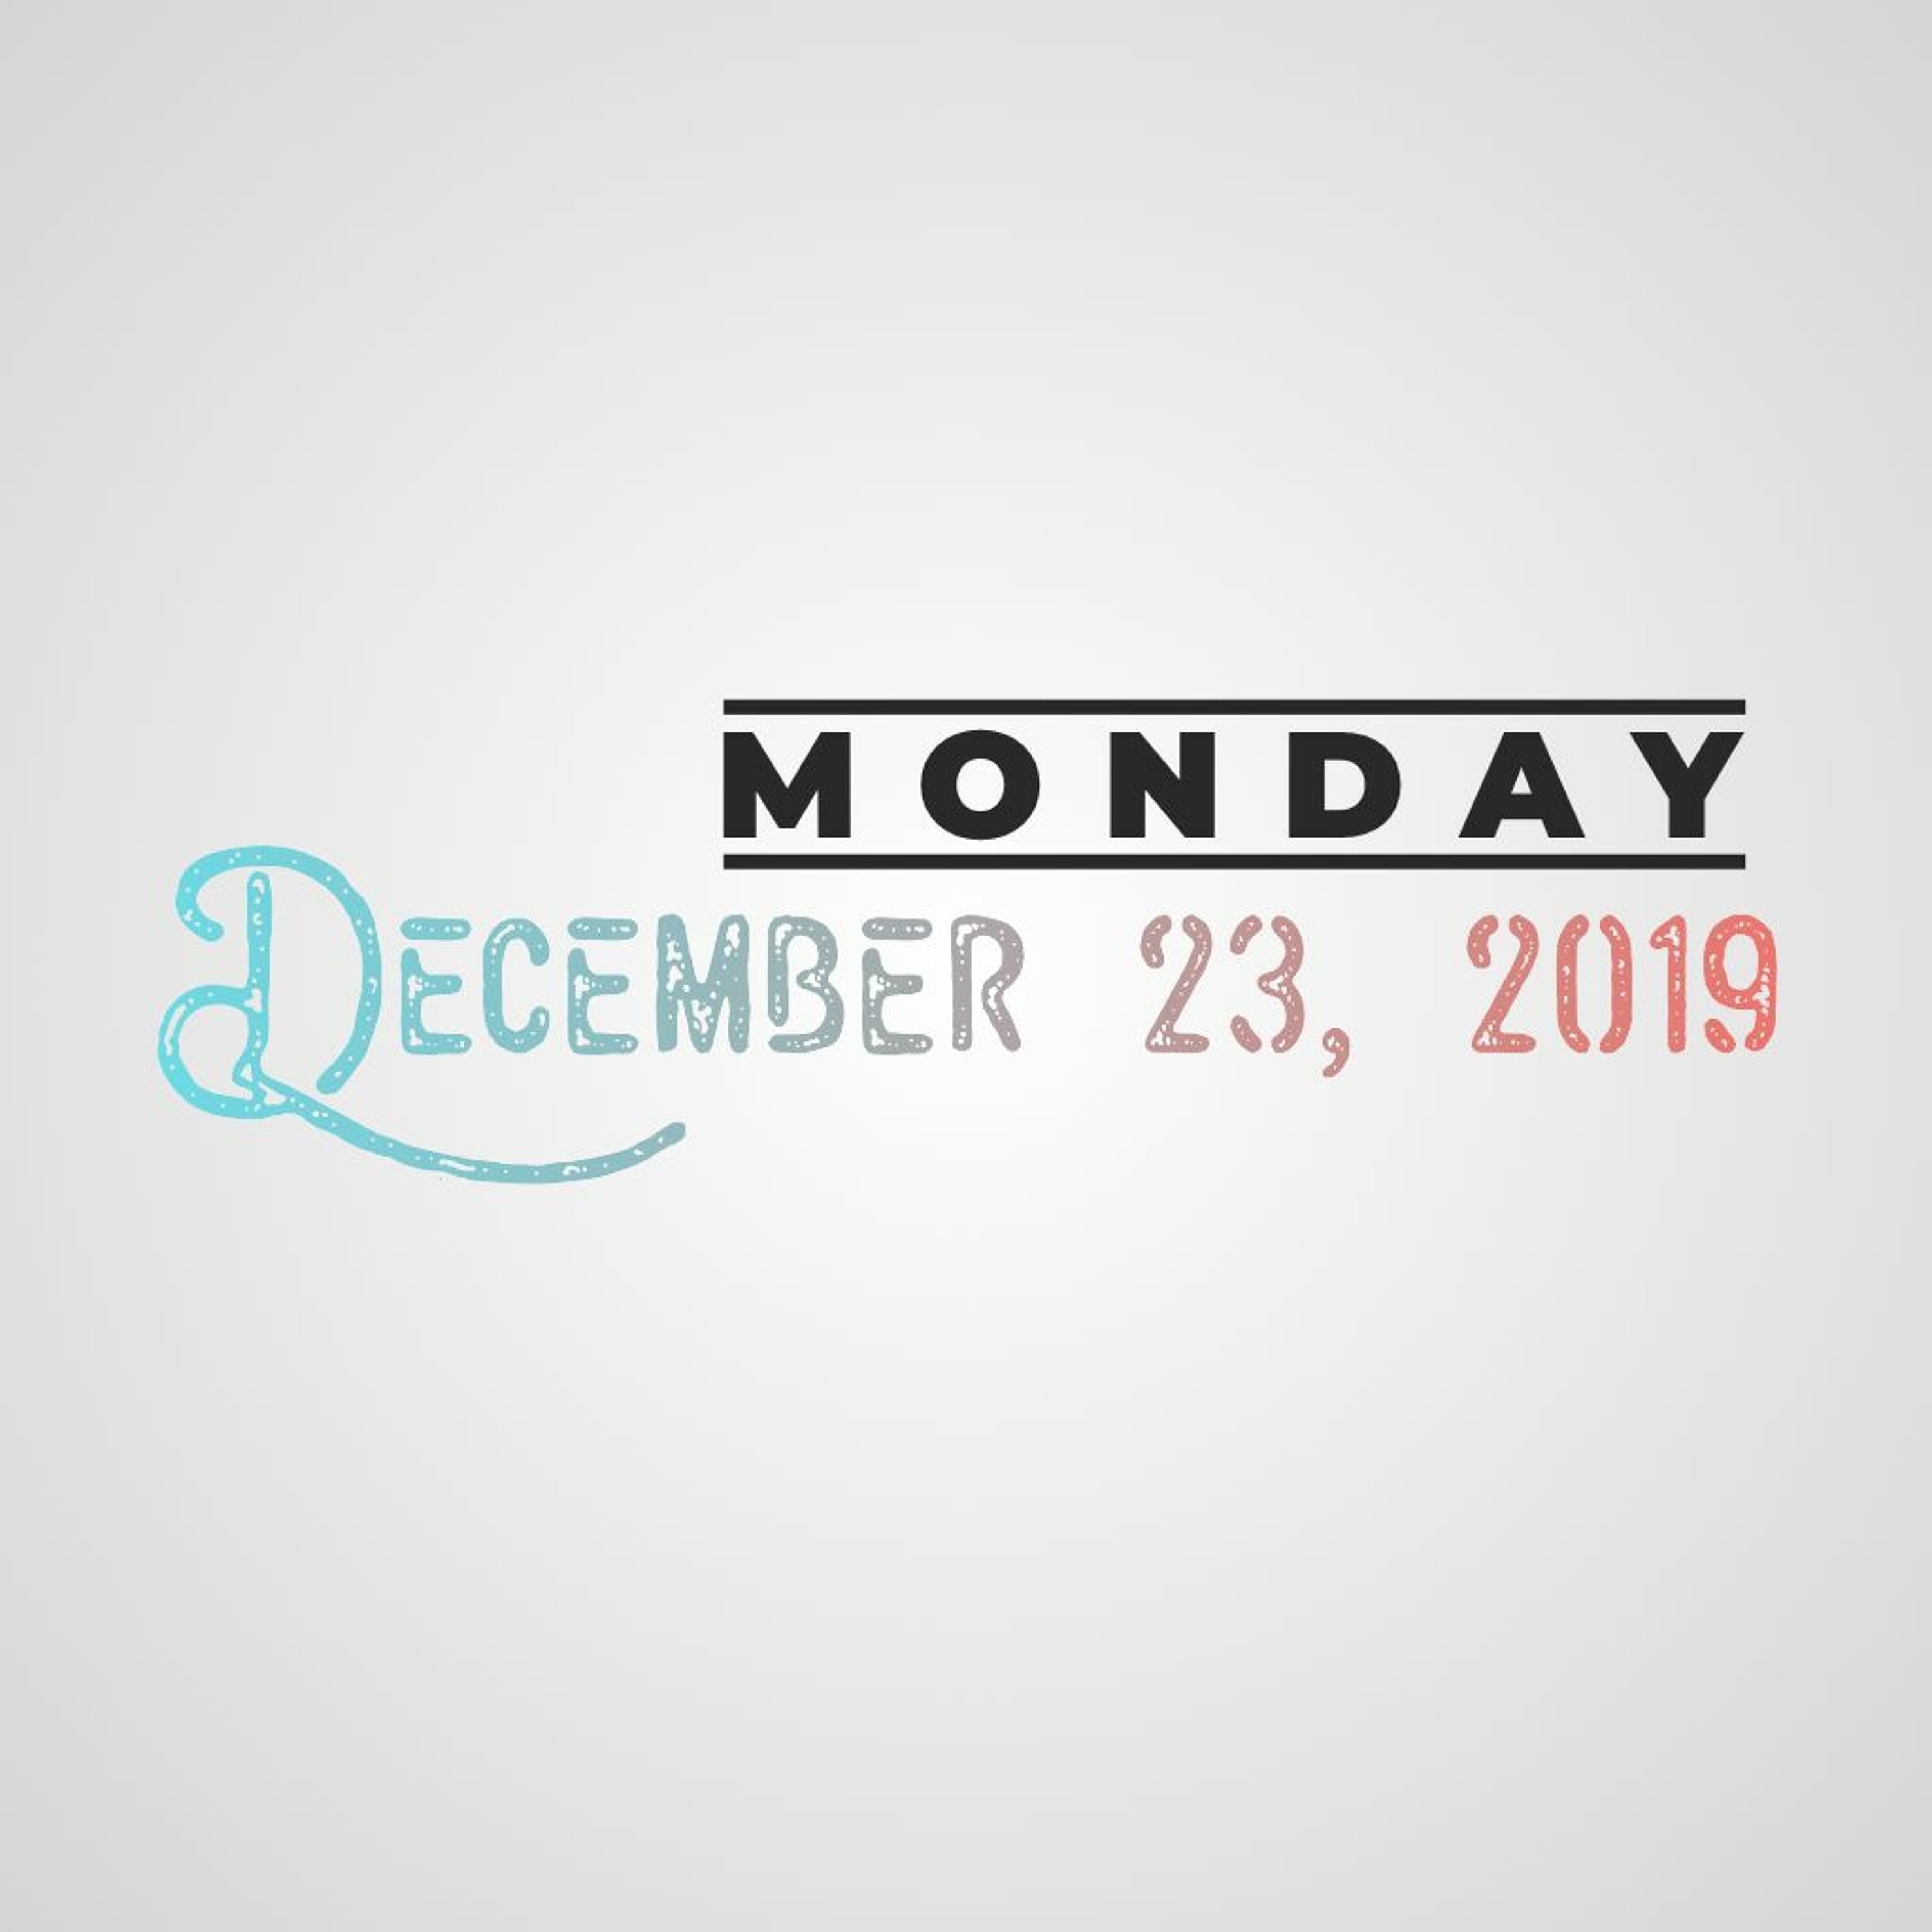 Monday, December 23, 2019